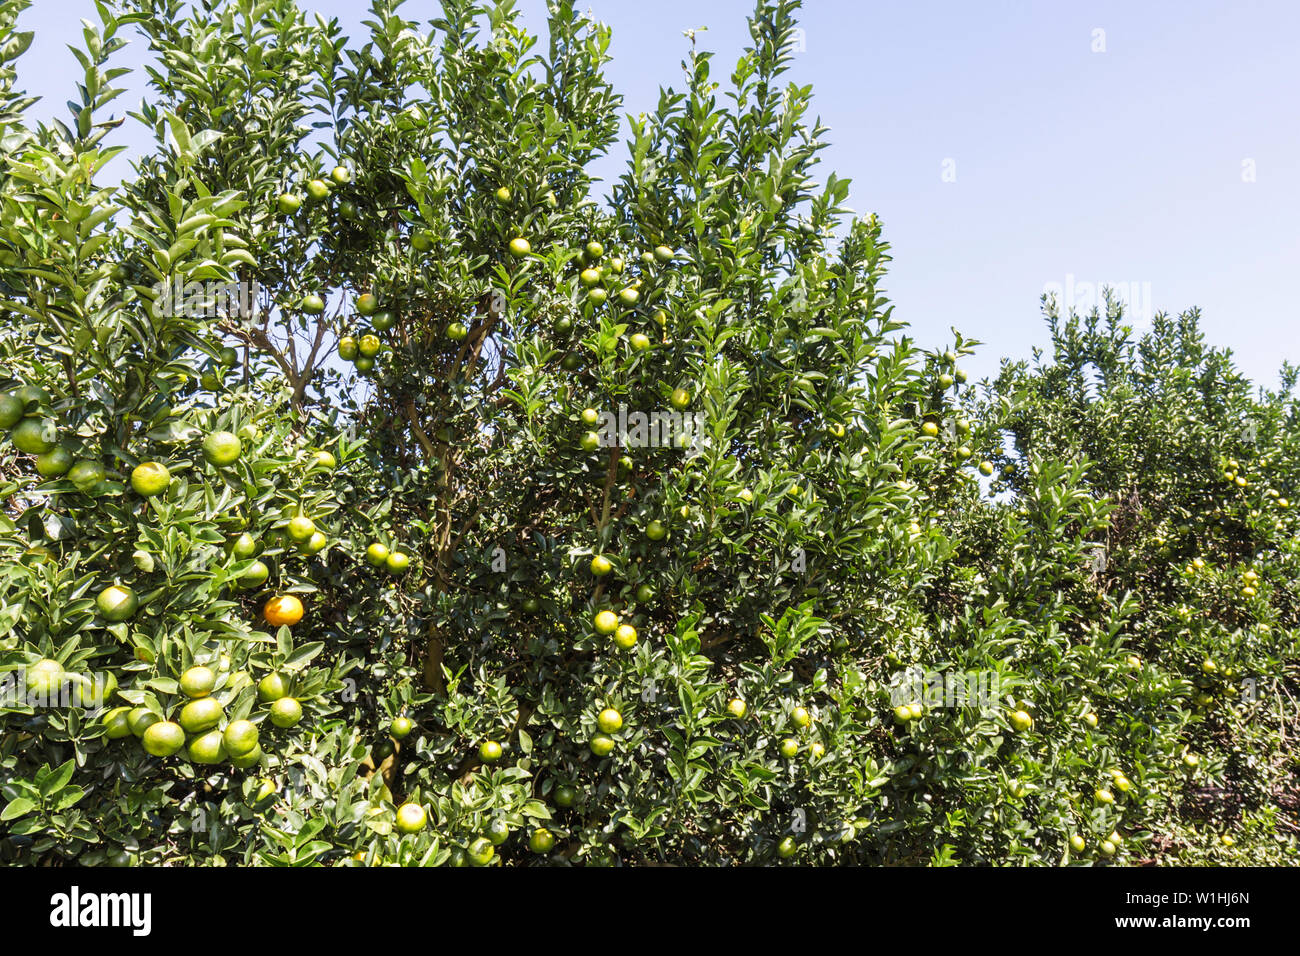 Florida Highlands County,Avon Park,US highway Route 27,citrus,orange grove,fruit,shrub,green,leaf,crop,FL091025231 Stock Photo